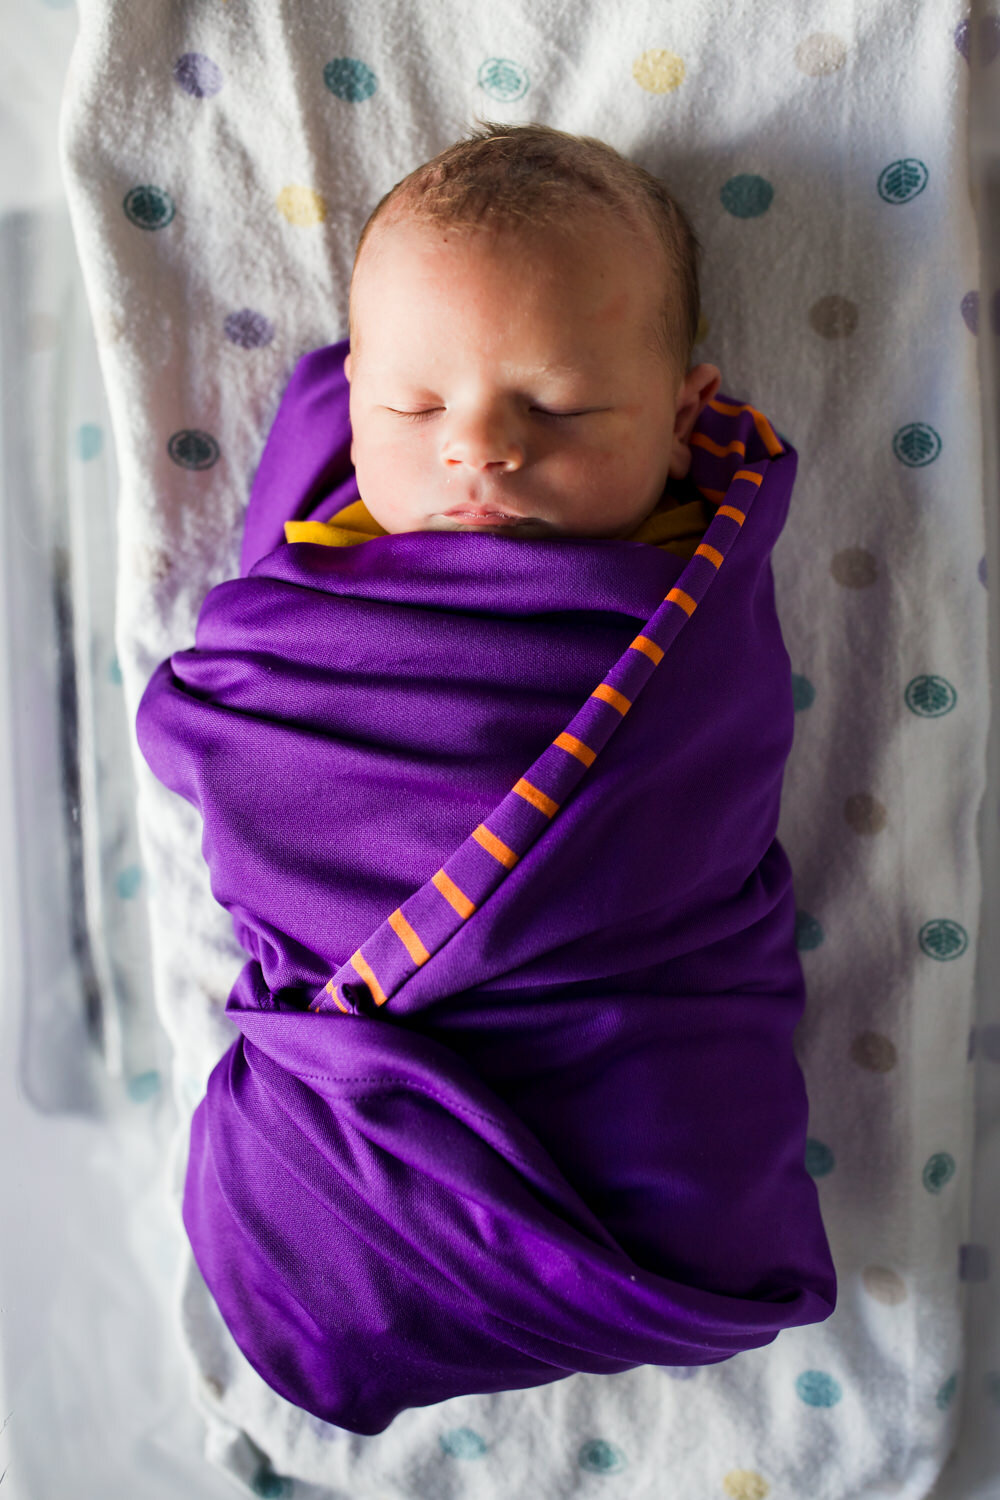 newborn wearing purple shirt as swaddle blanket